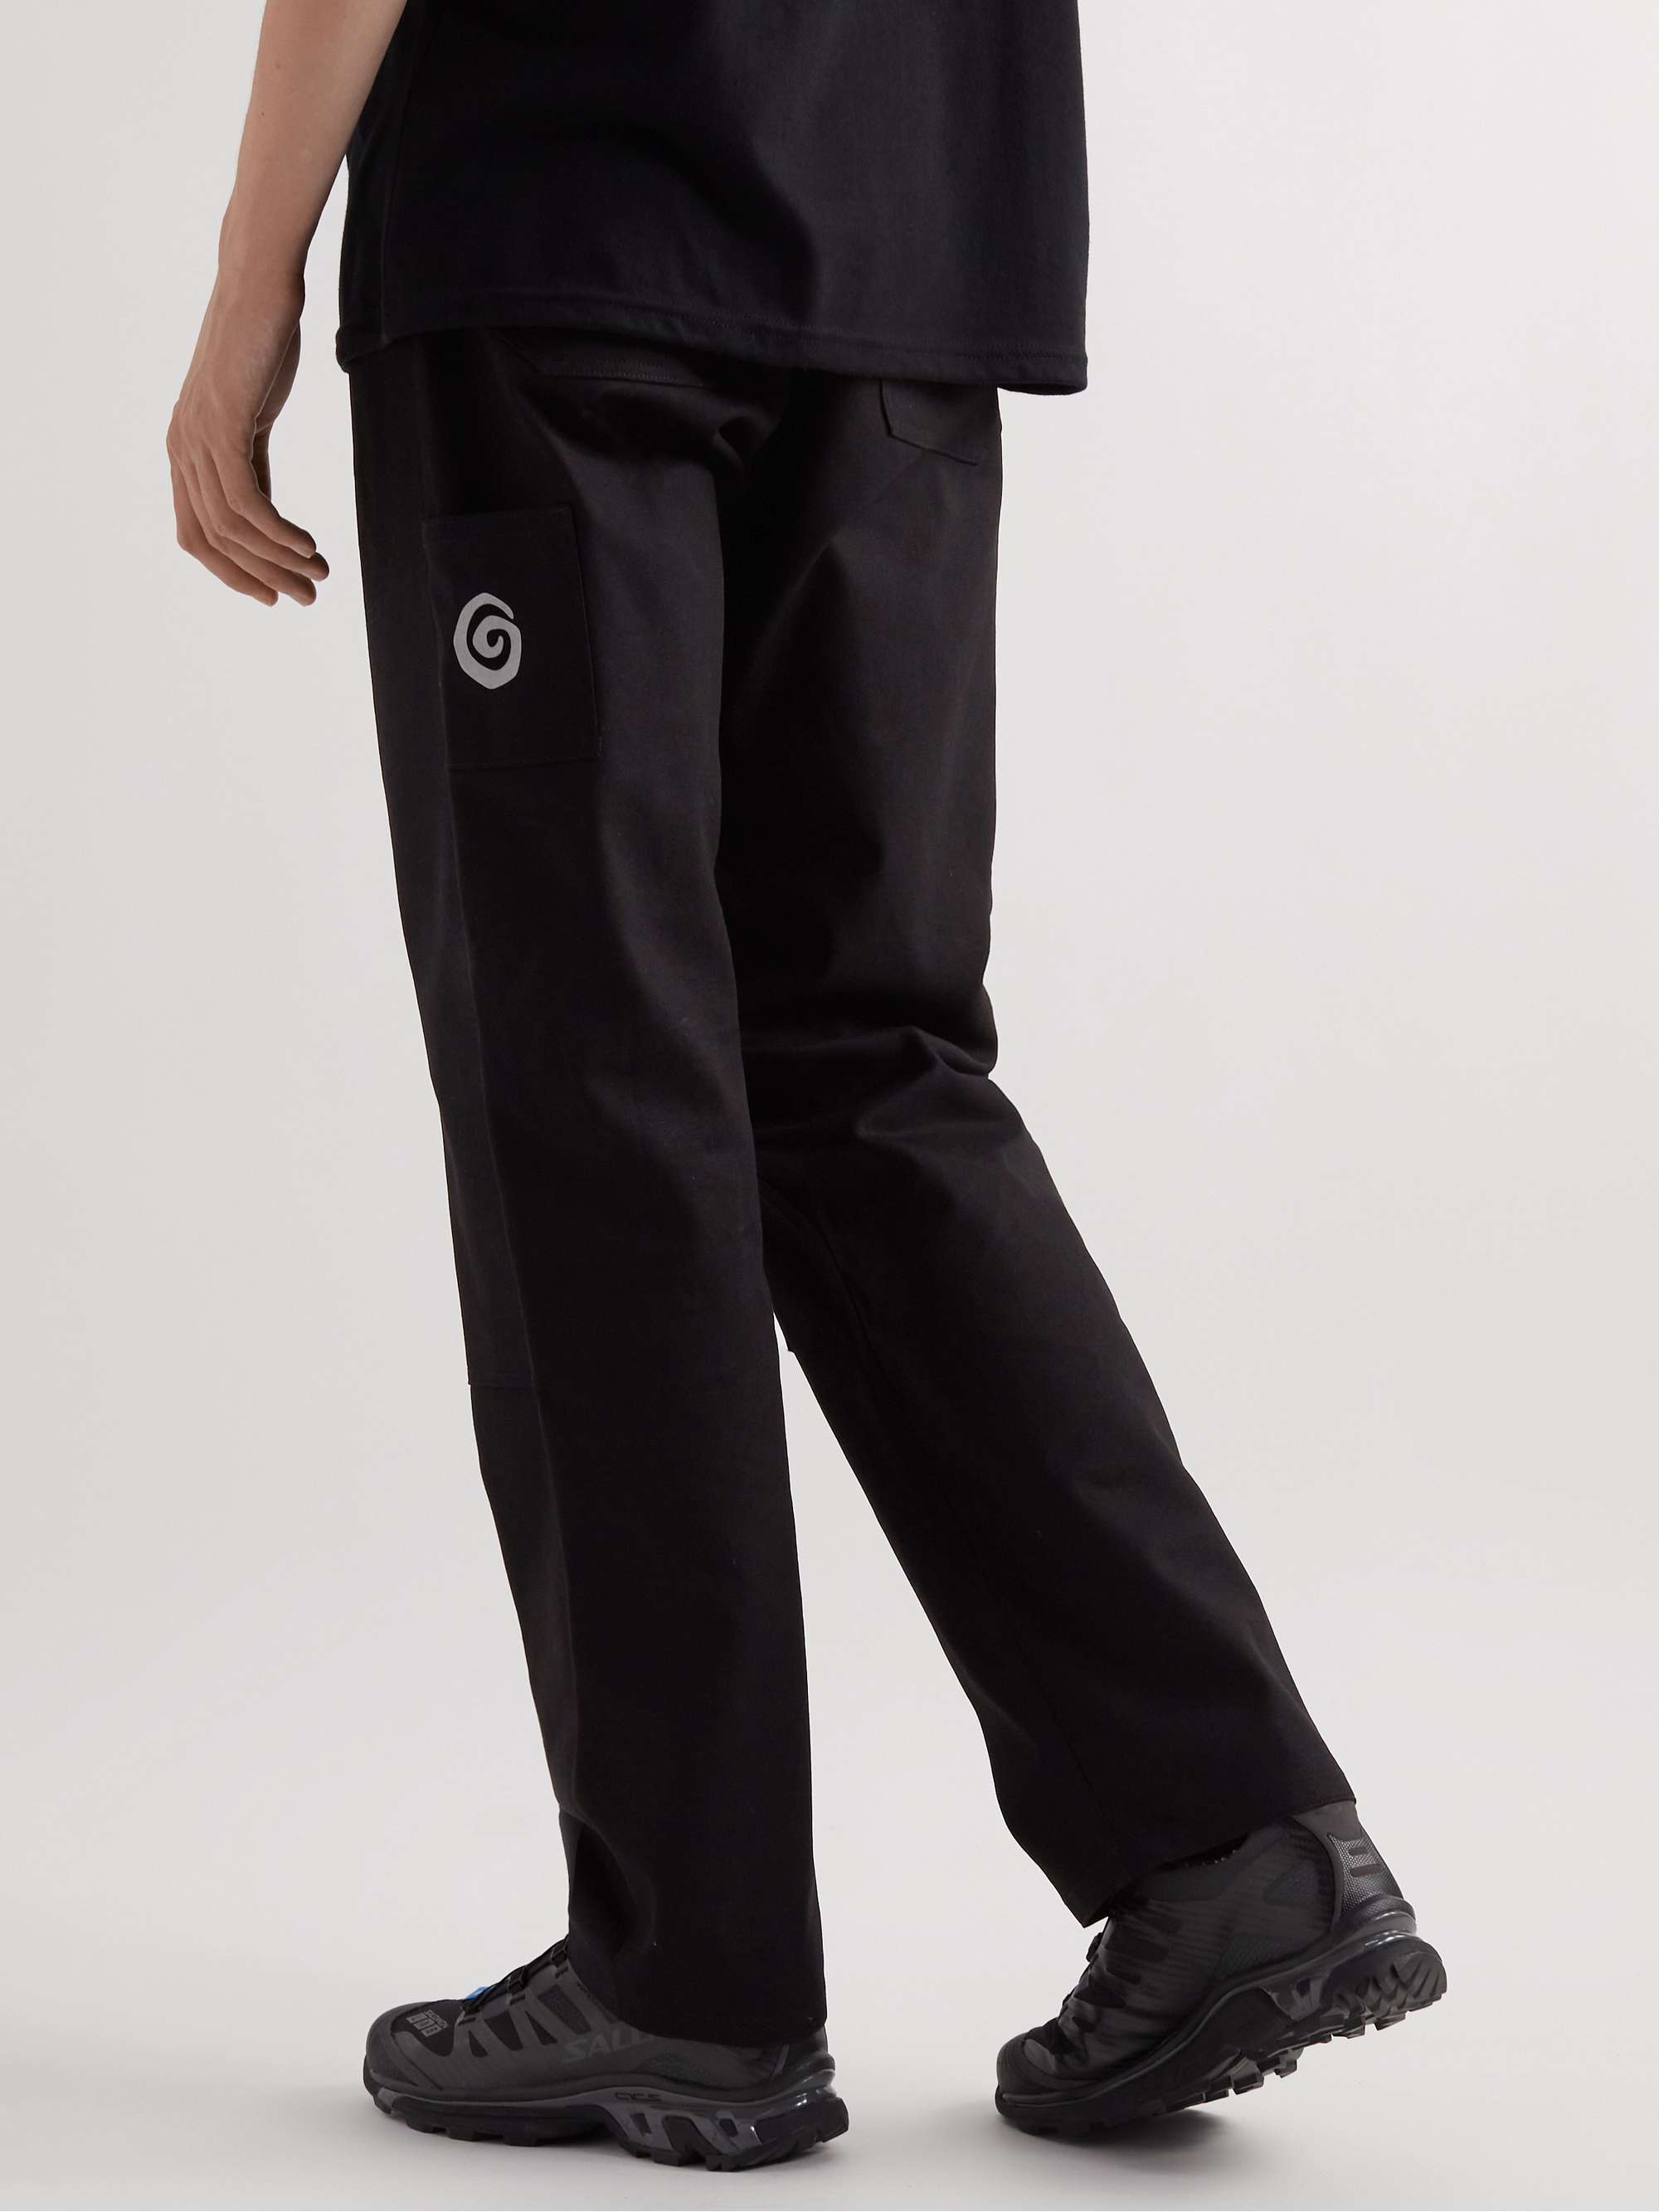 OSTRYA Hardy Logo-Print Straight-Leg Cotton Cargo Trousers